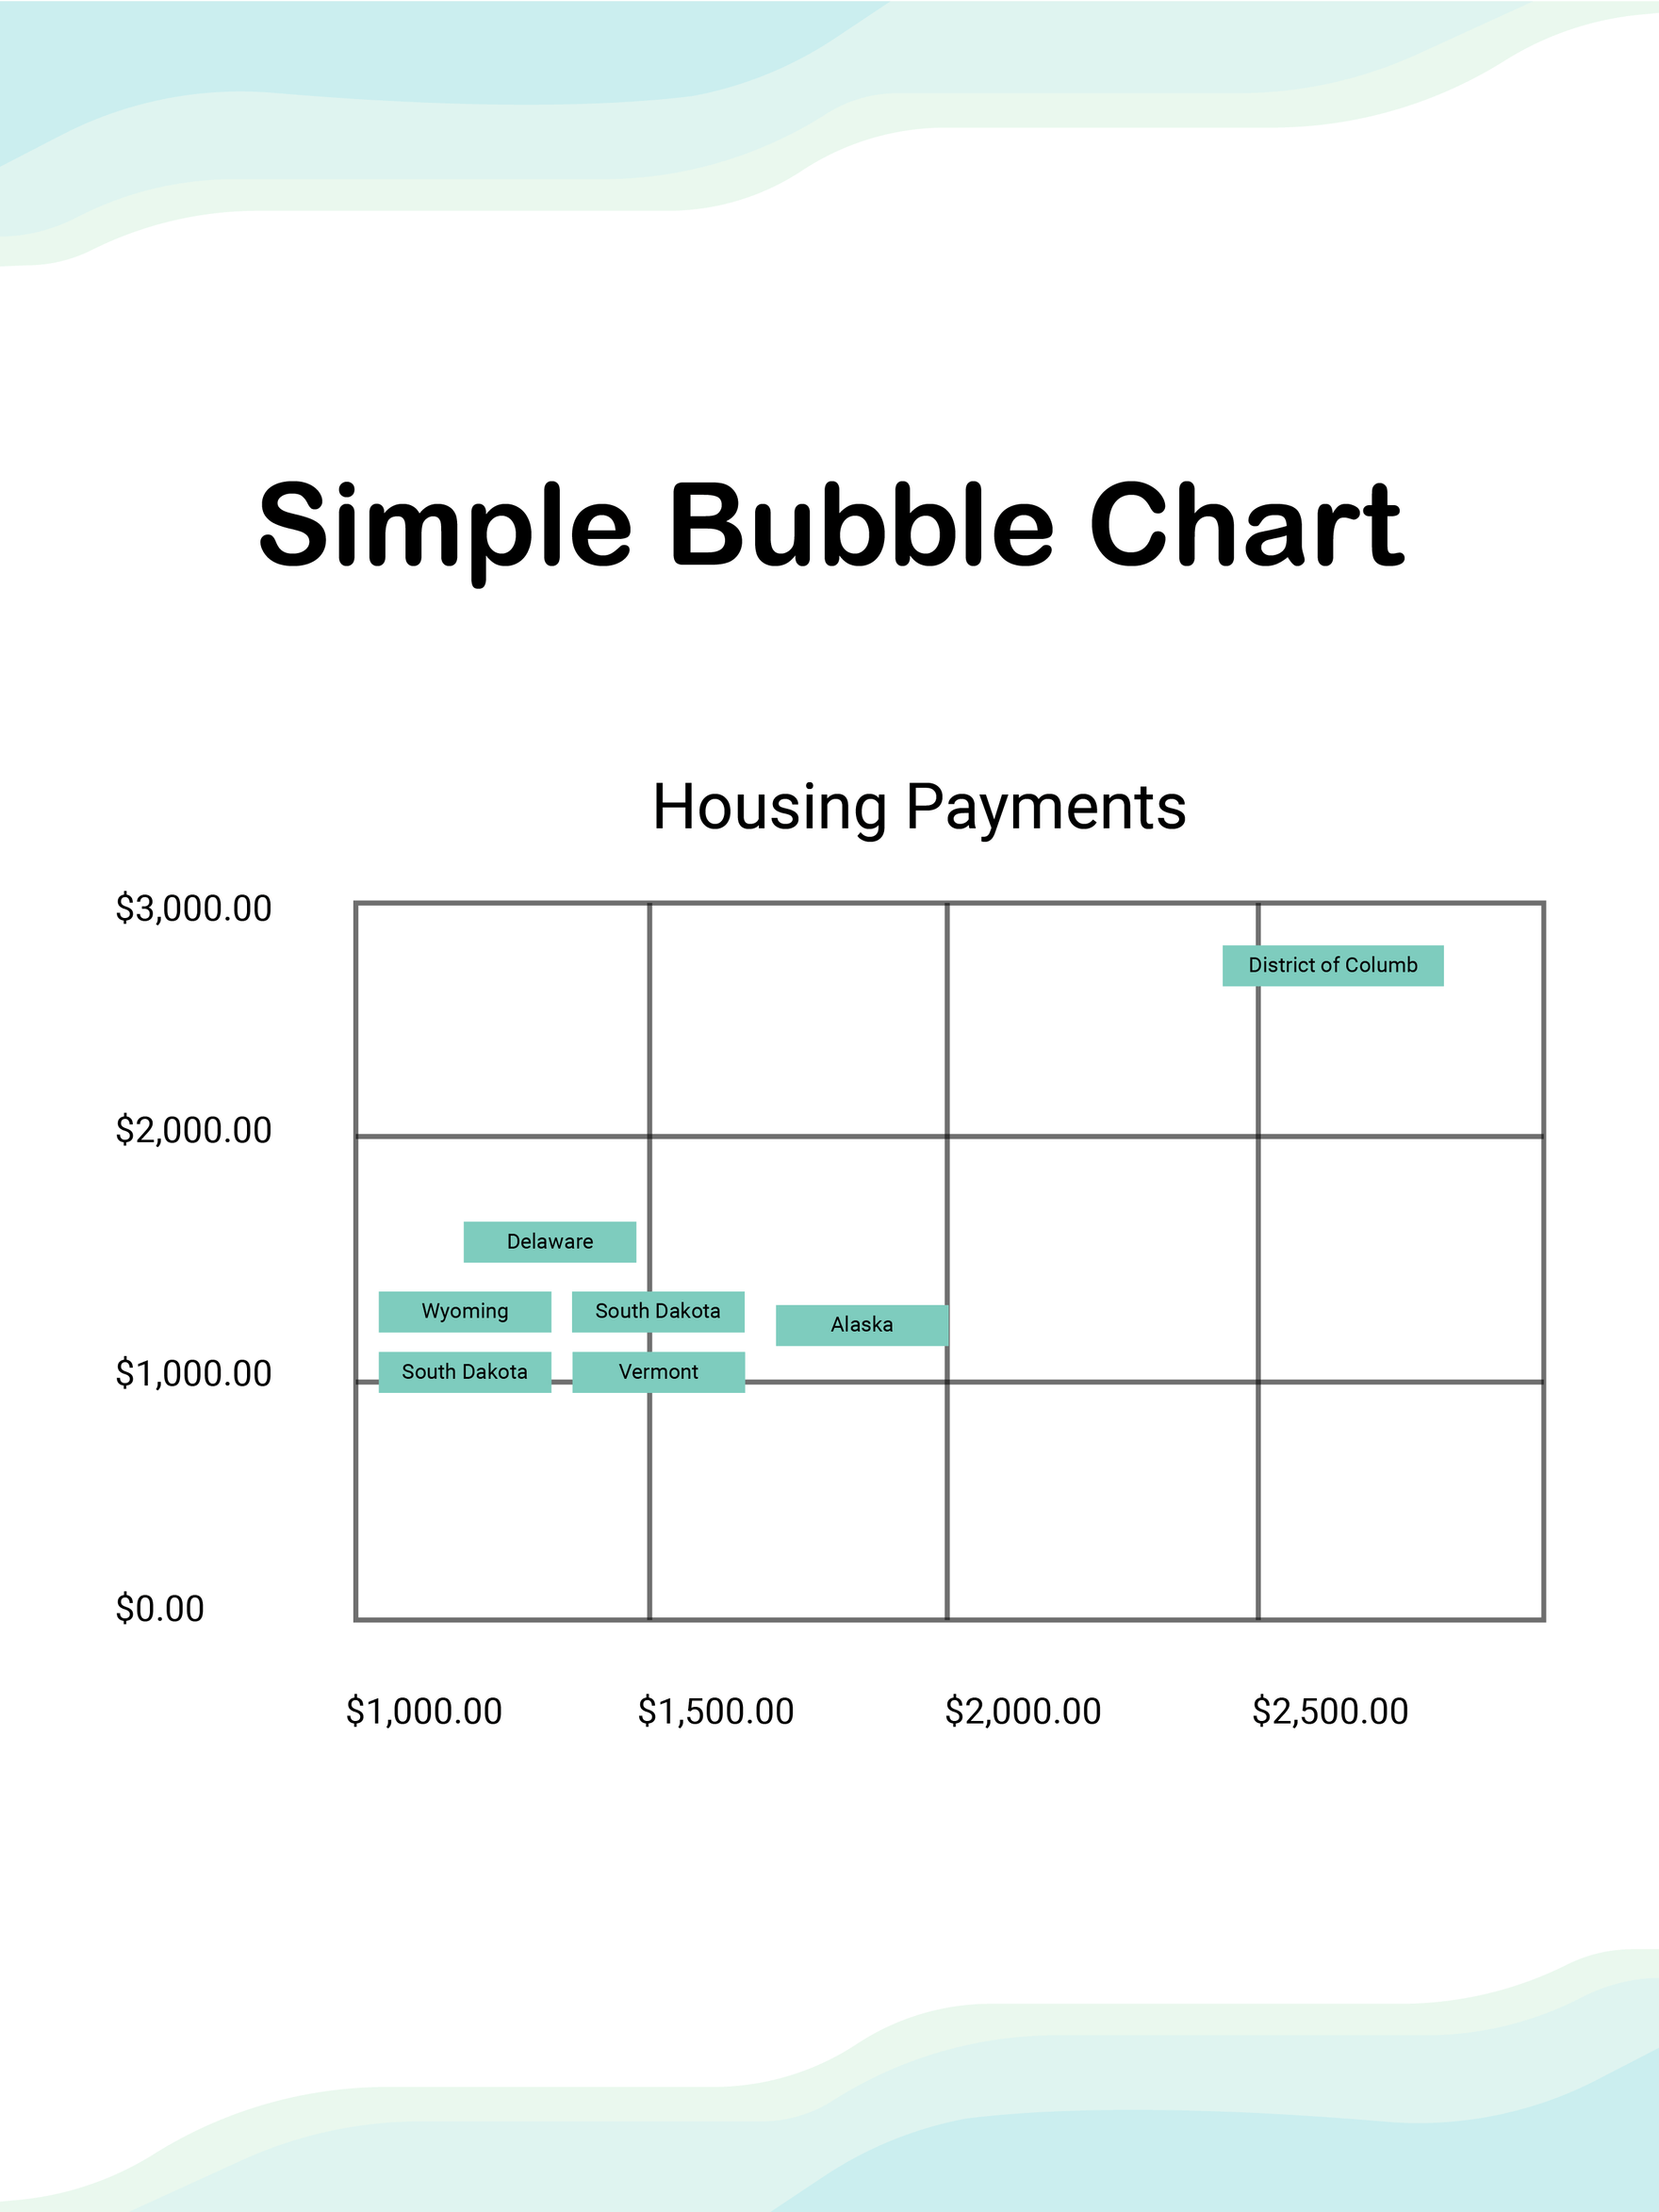 Simple Bubble Chart in PDF, Illustrator